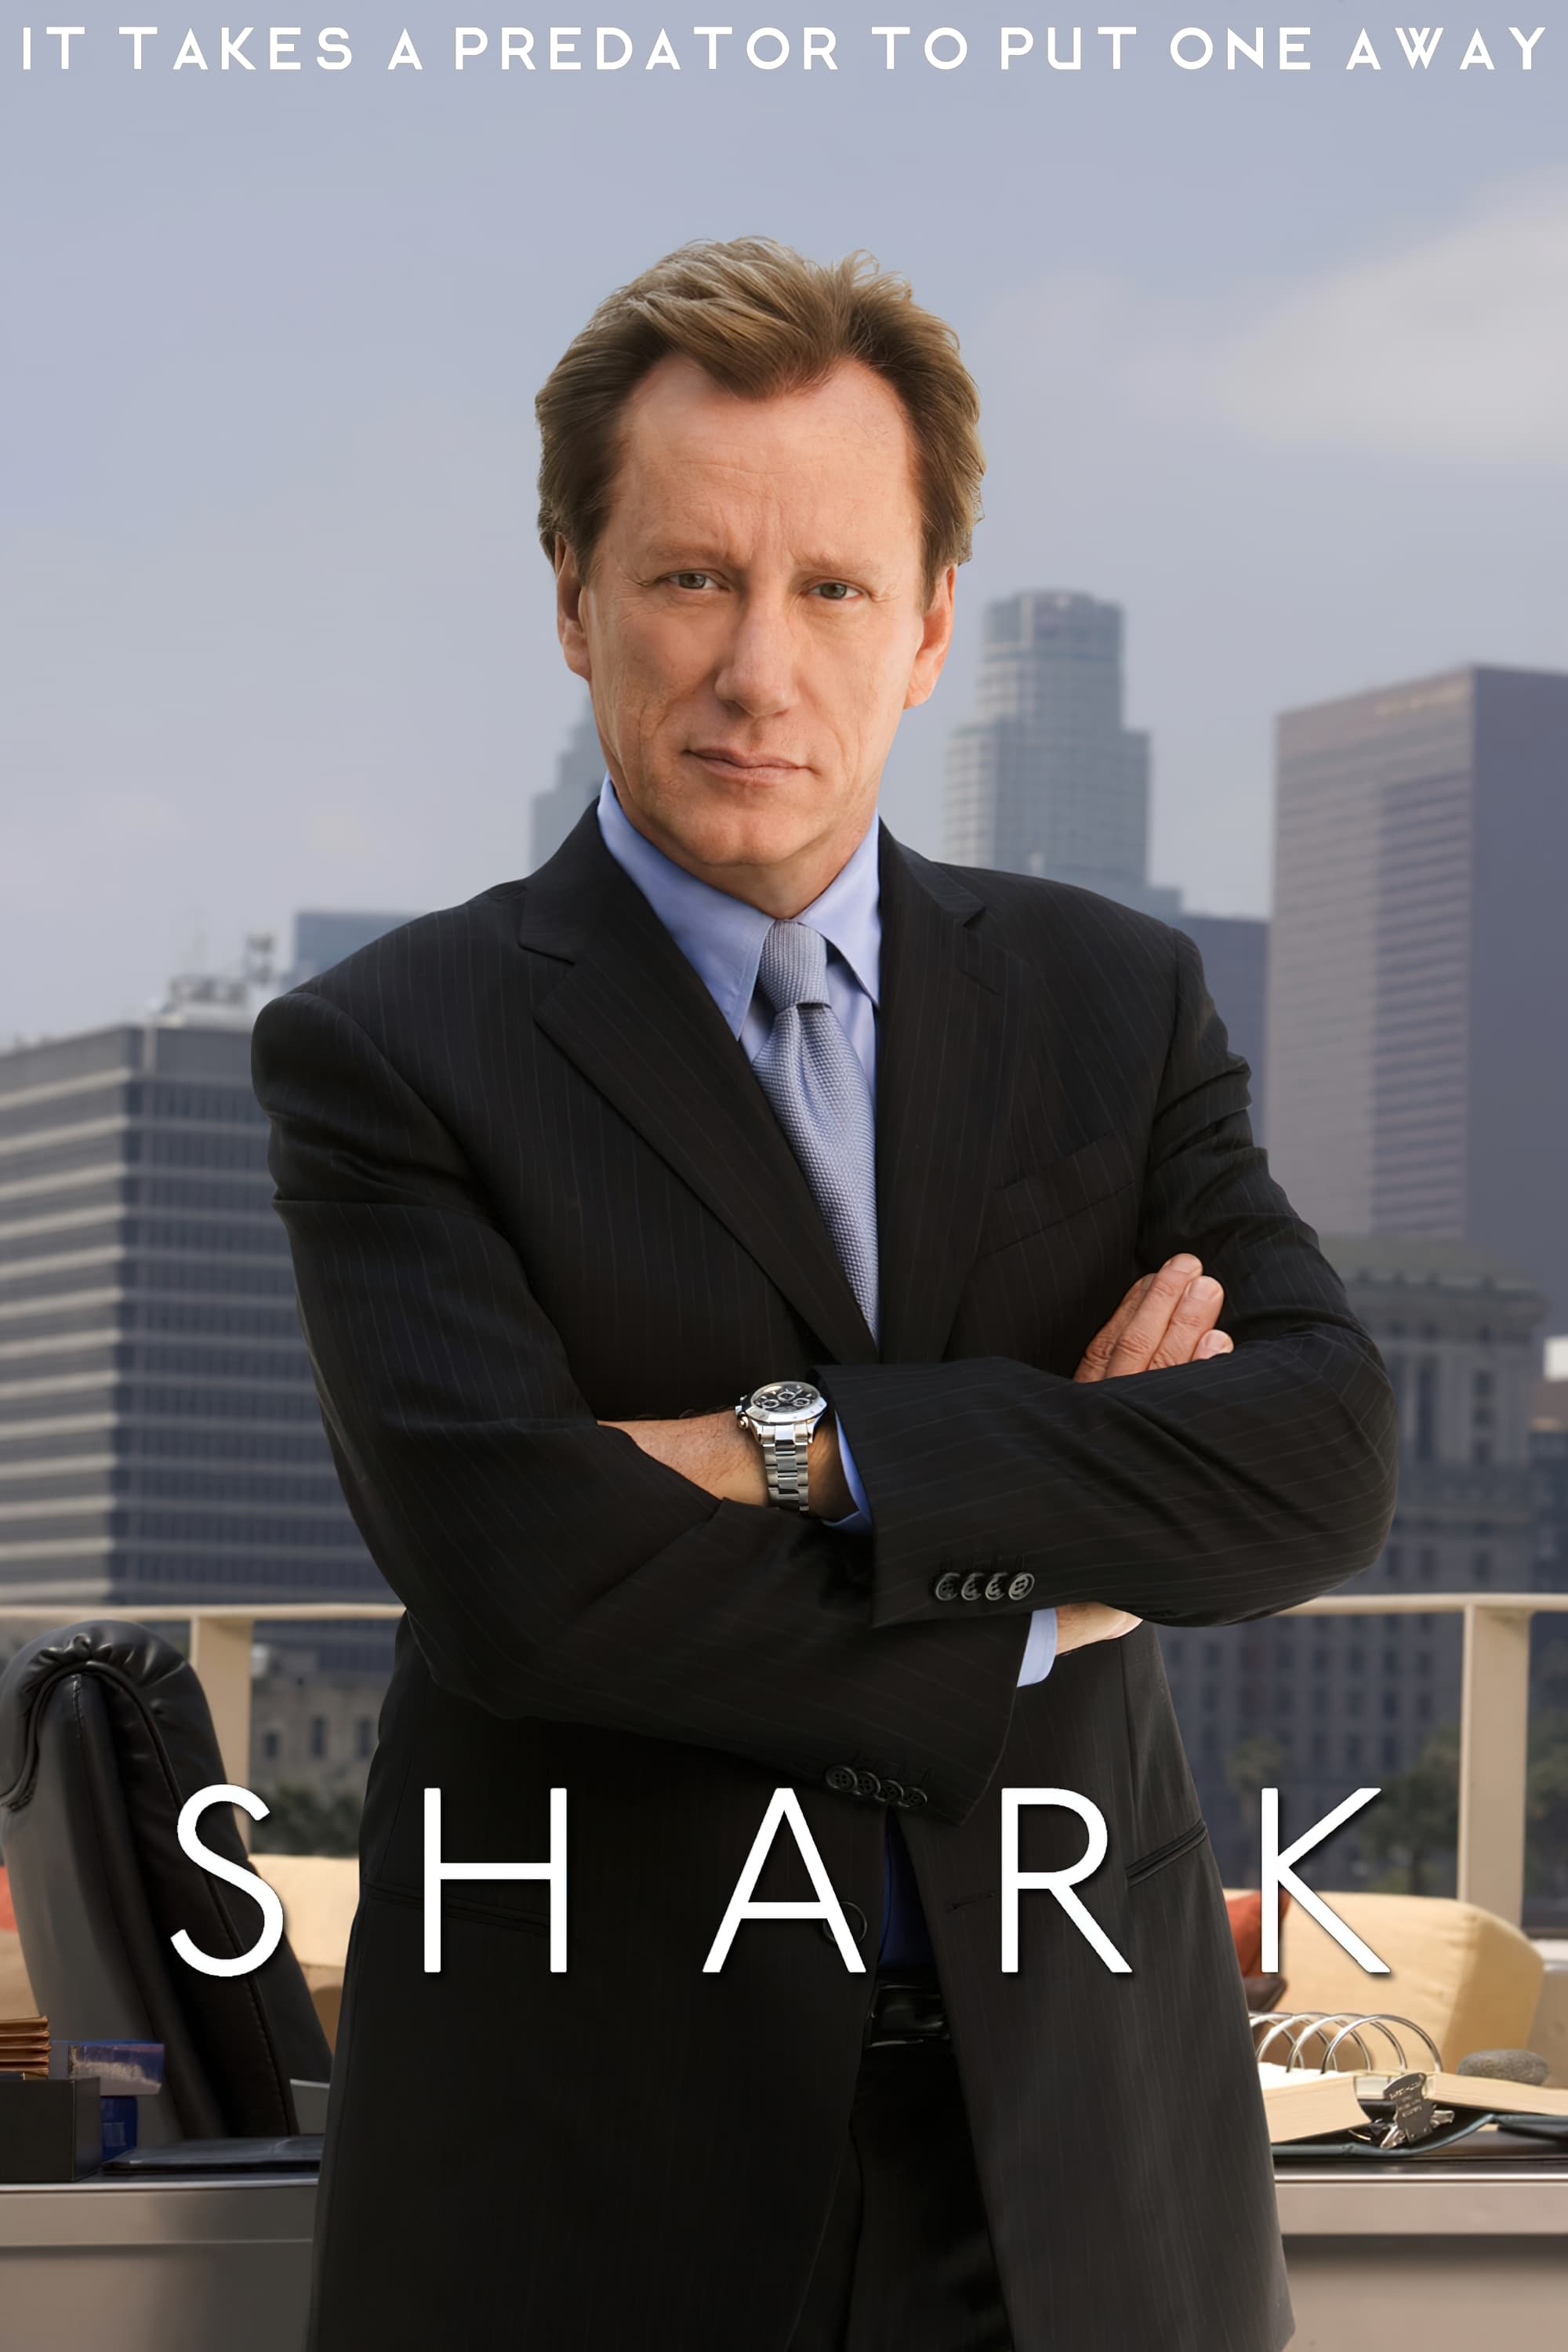 Shark TV Shows About Prosecutor